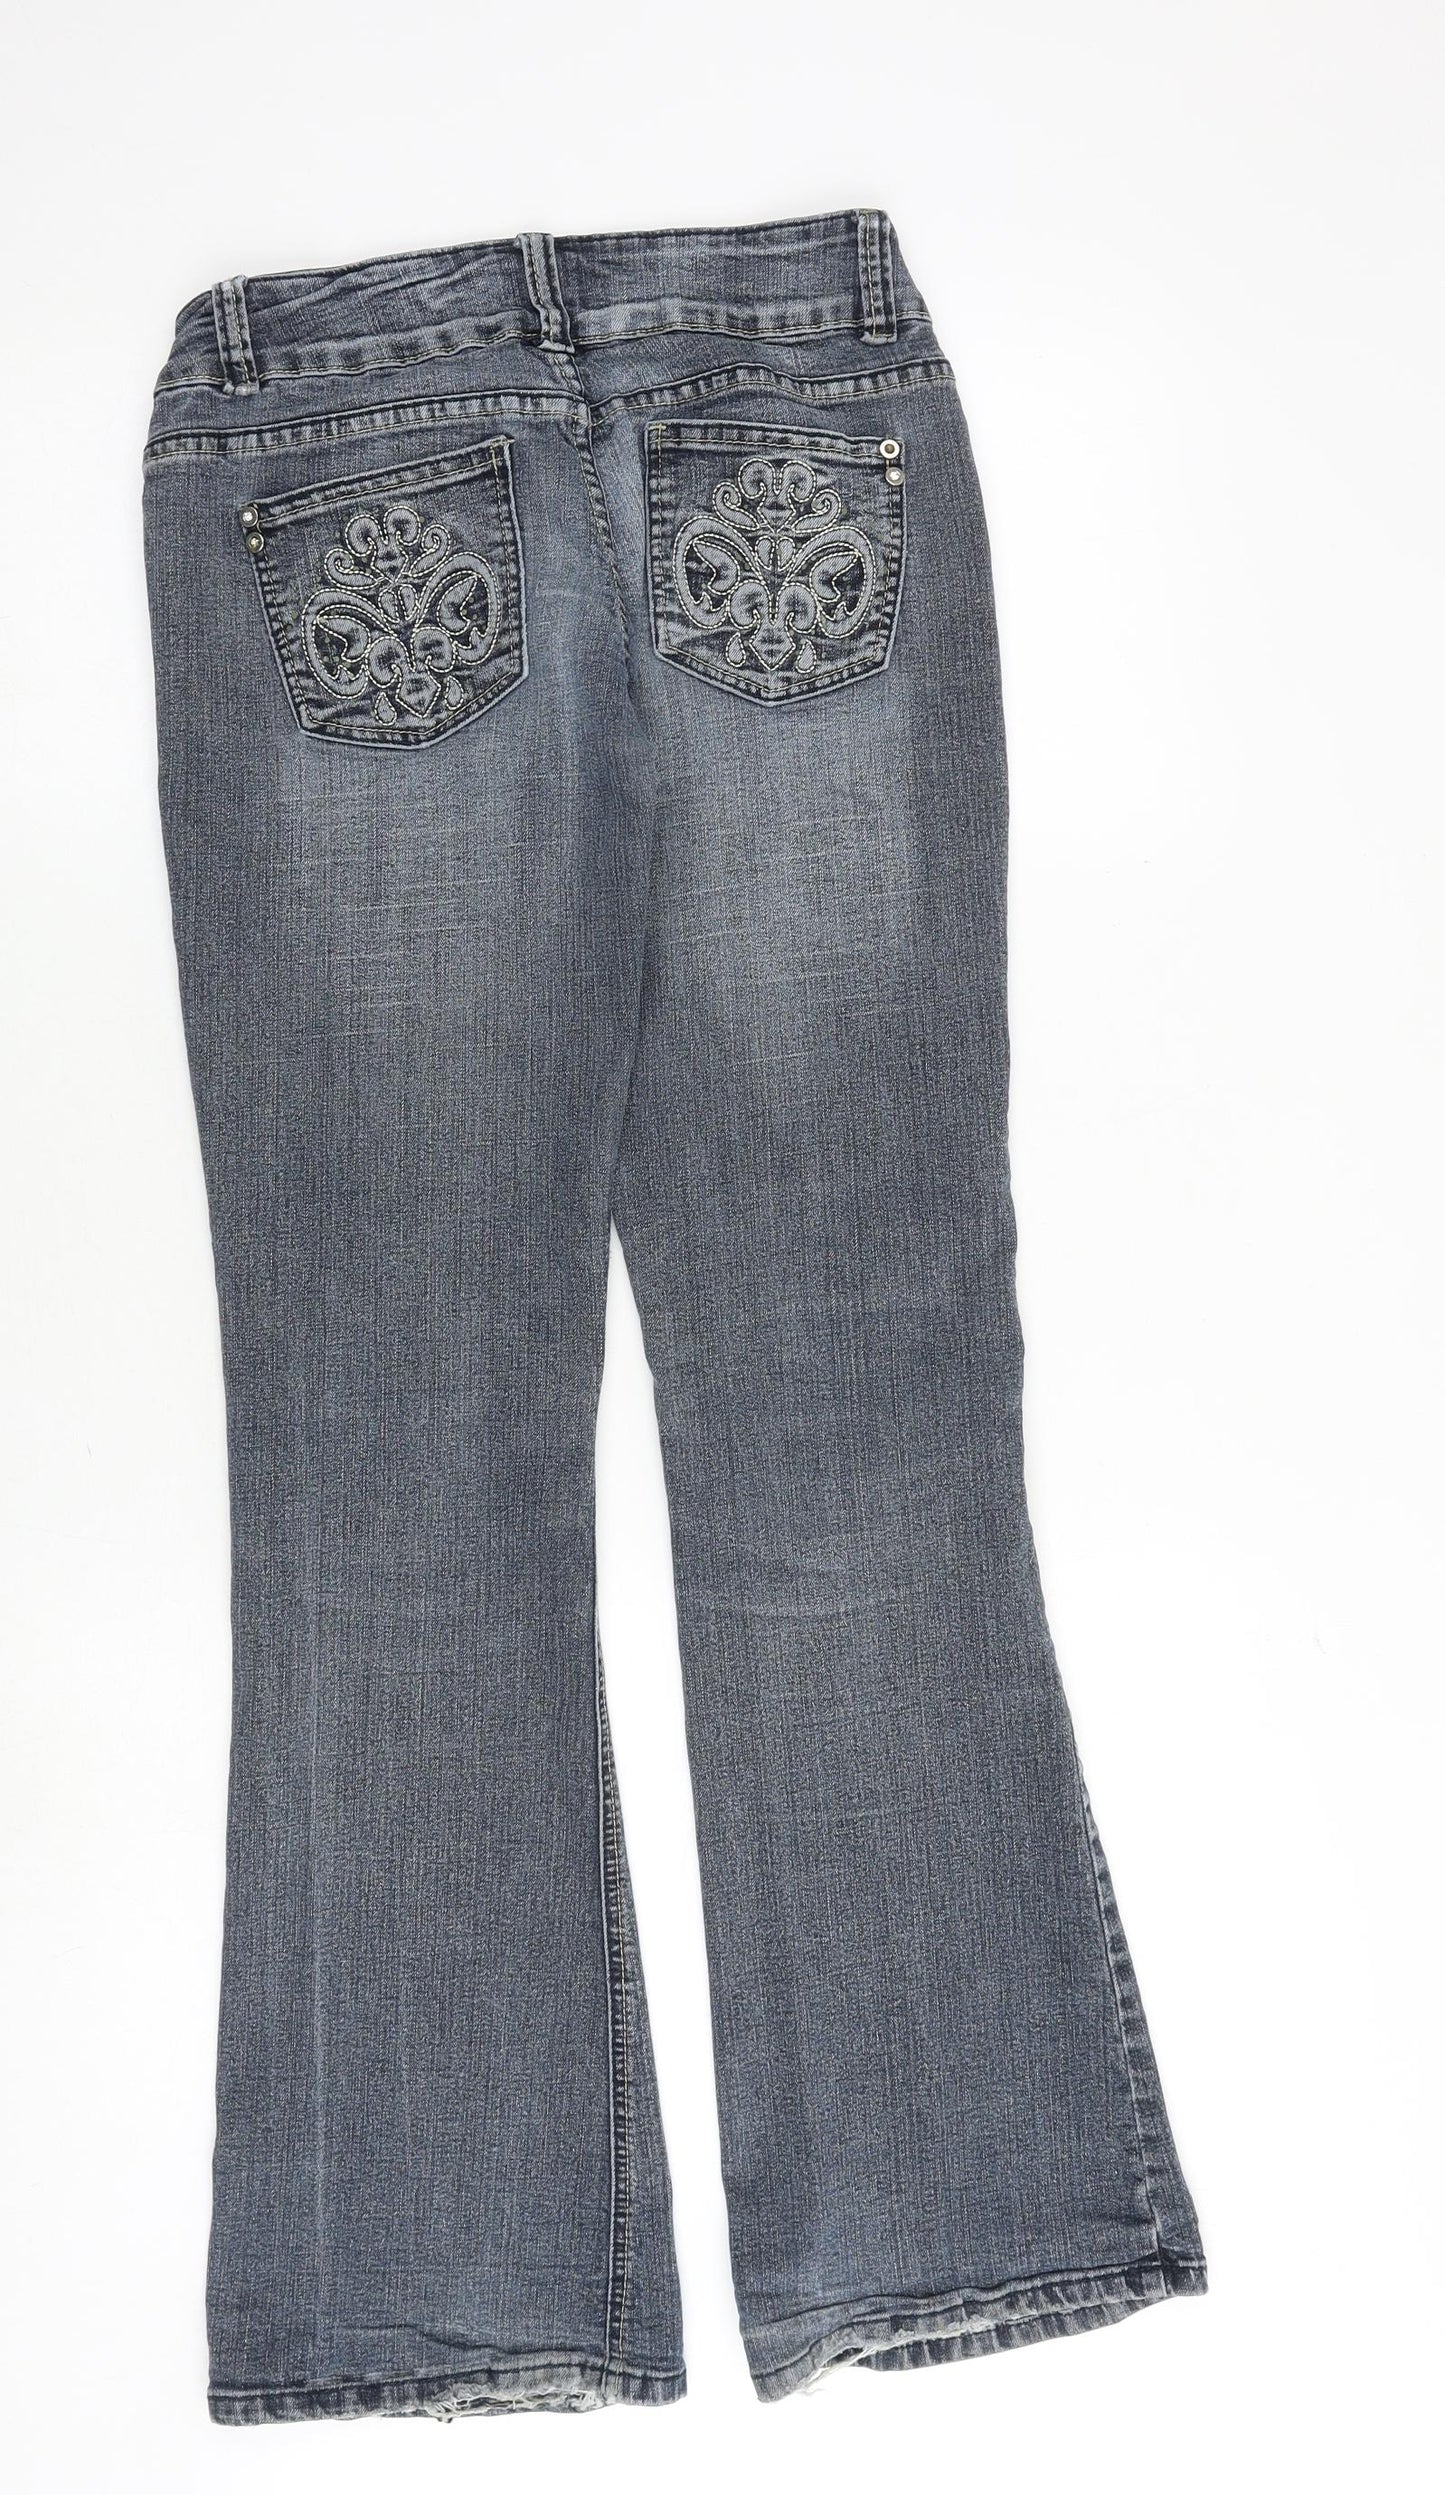 Bay Island Womens Blue Cotton Bootcut Jeans Size 10 Regular Zip - Patterned Pocket Detail